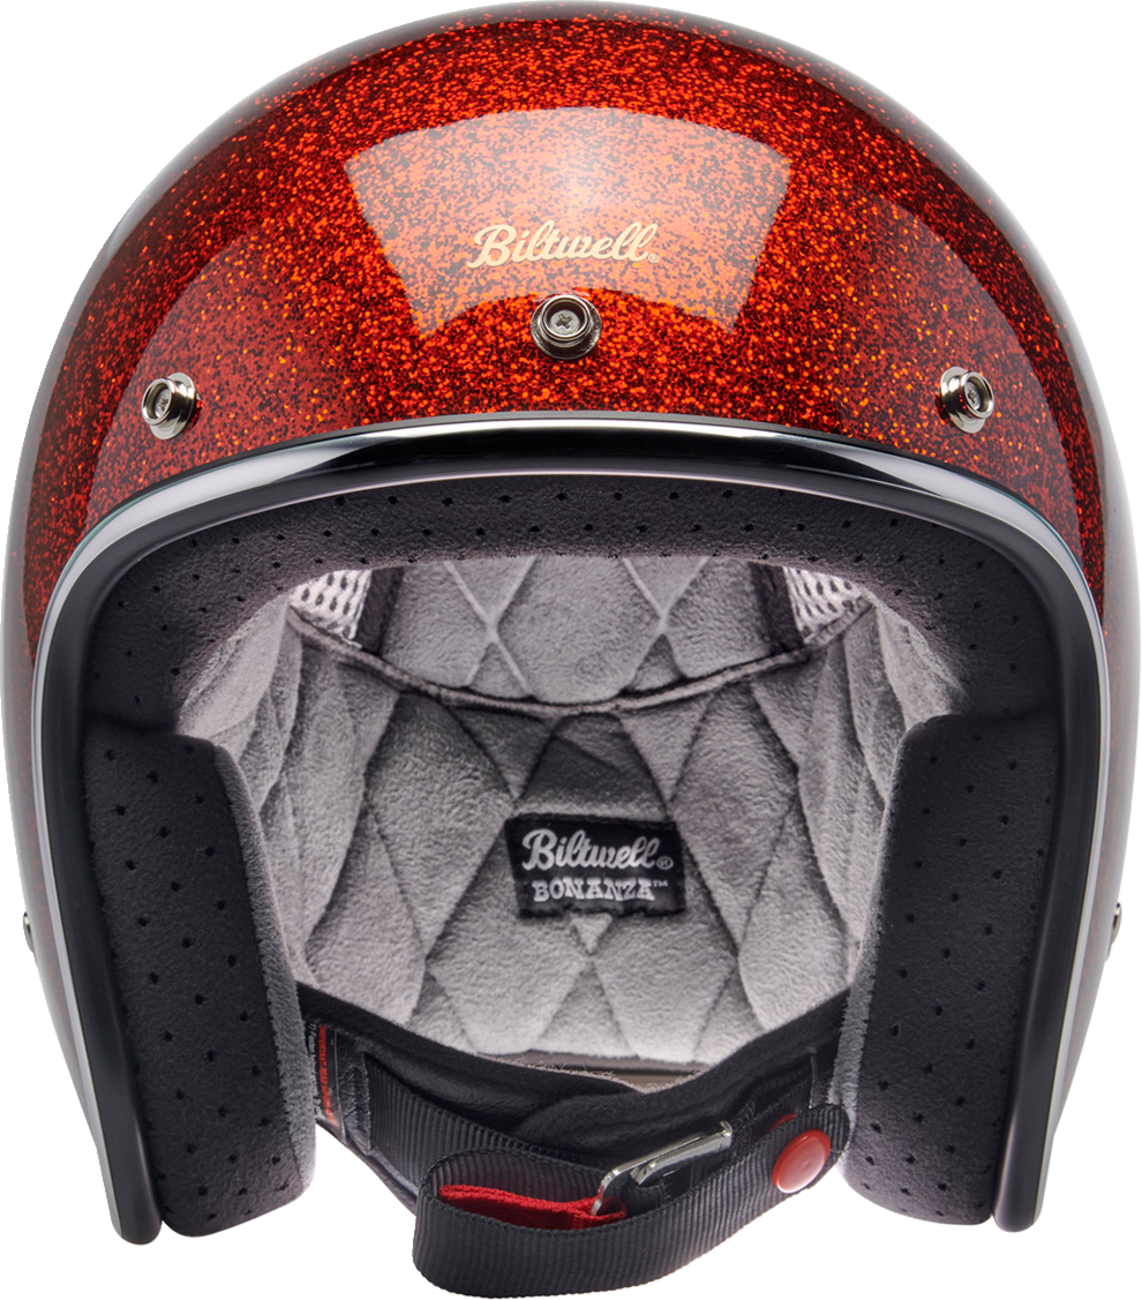 BILTWELL Bonanza Helmet - Rootbeer Megaflake - 2XL 1001-457-206